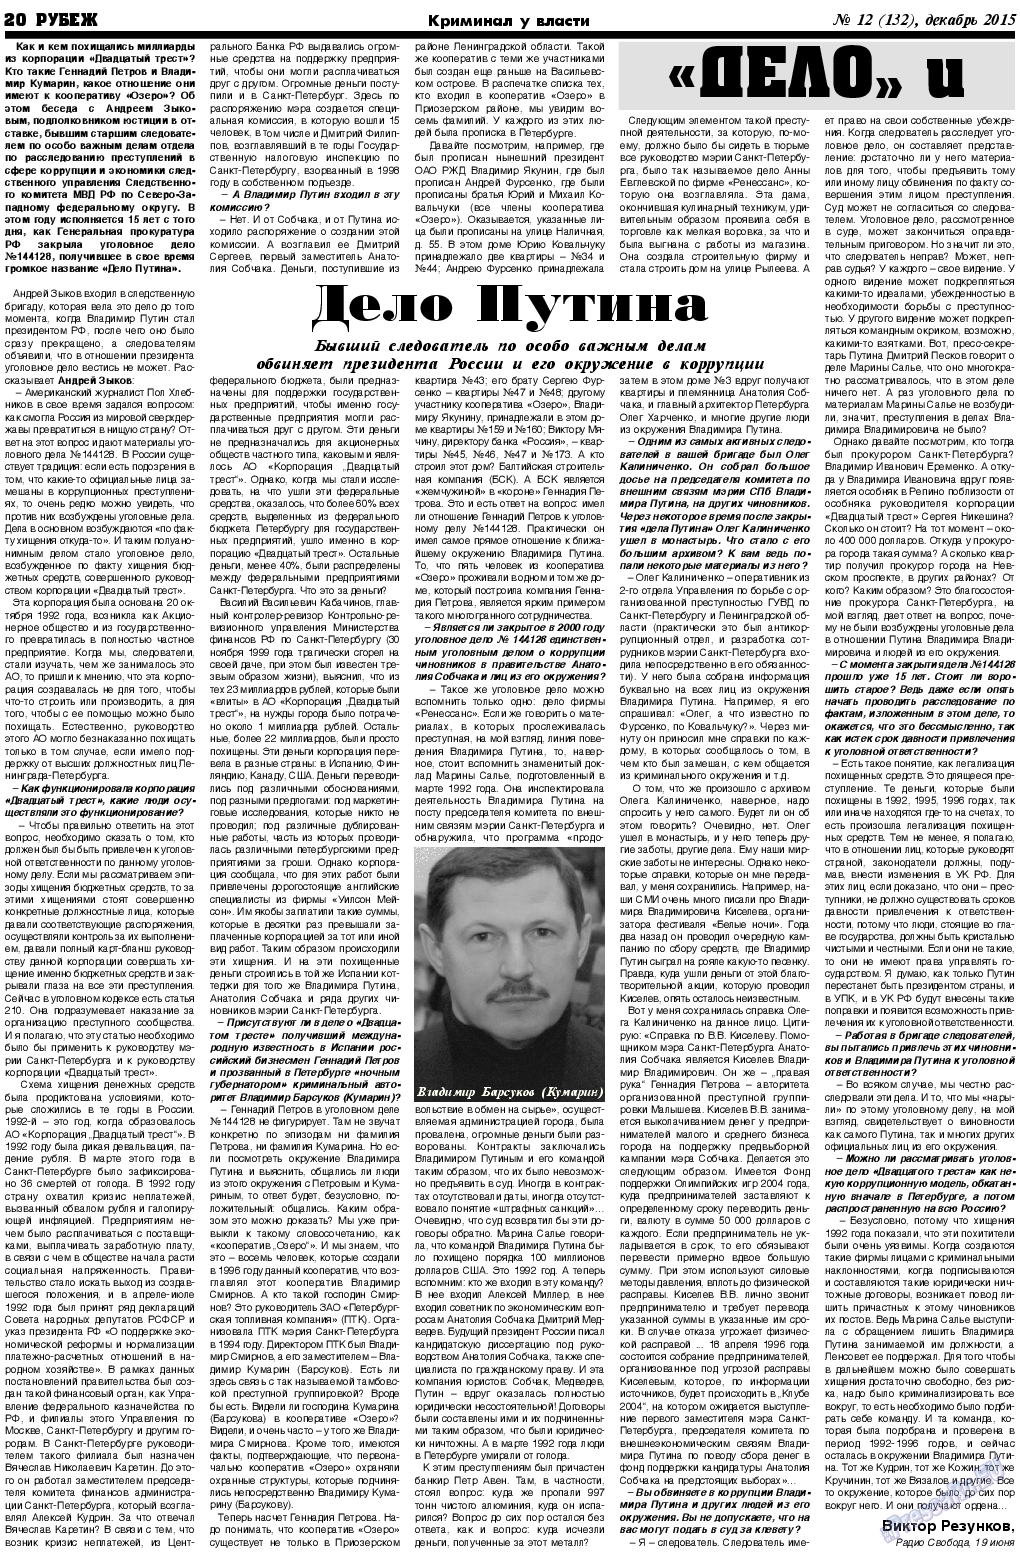 Рубеж, газета. 2015 №12 стр.20